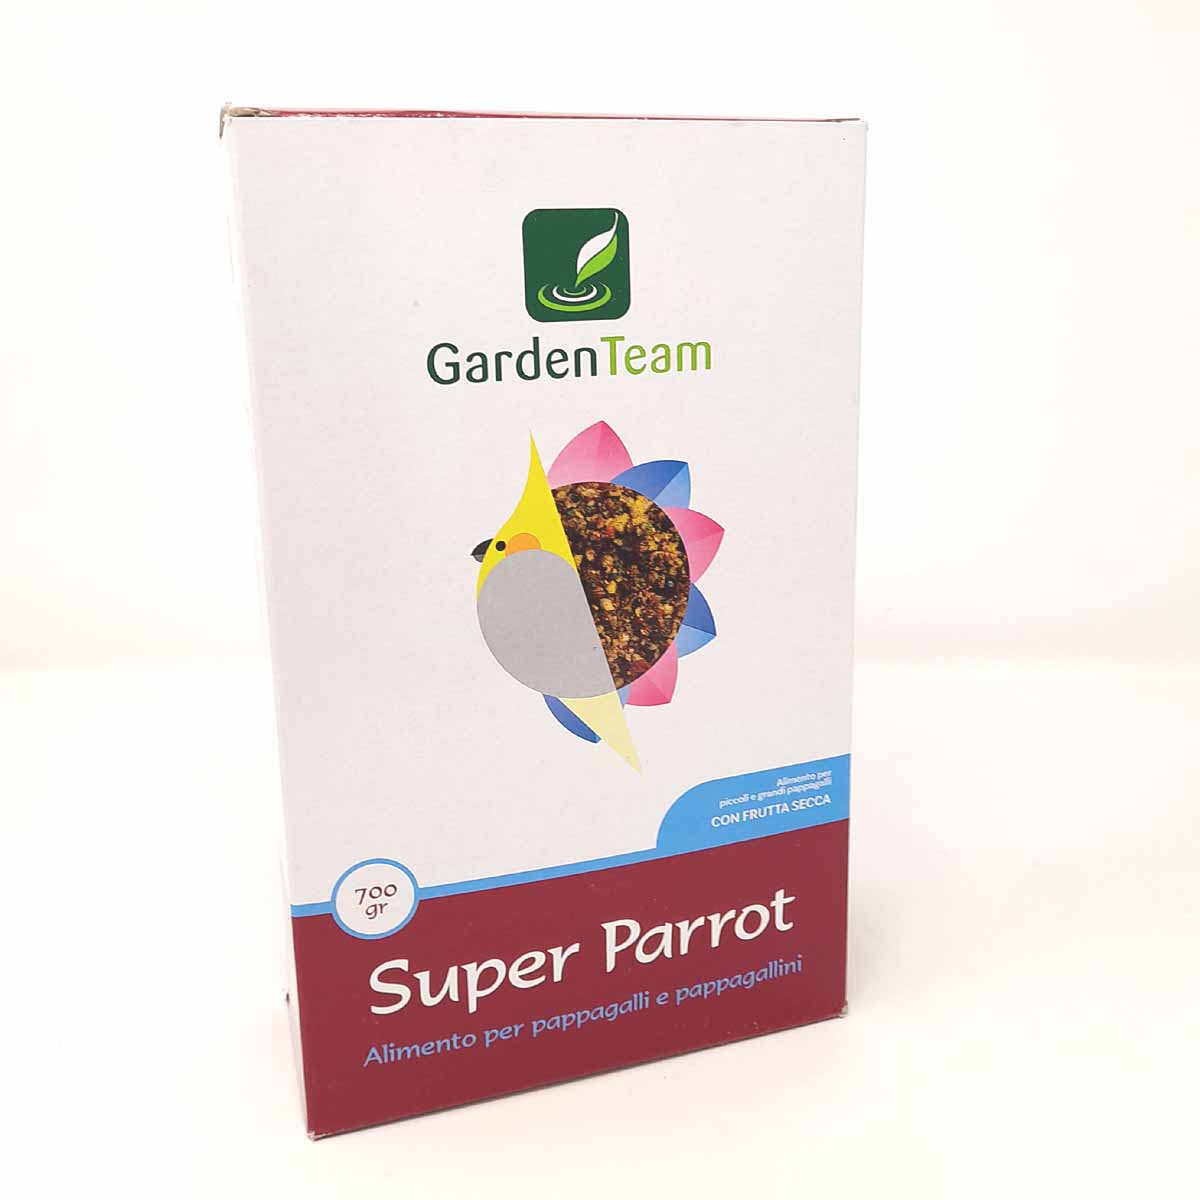 Super Parrot – Per pappagalli e pappagallini